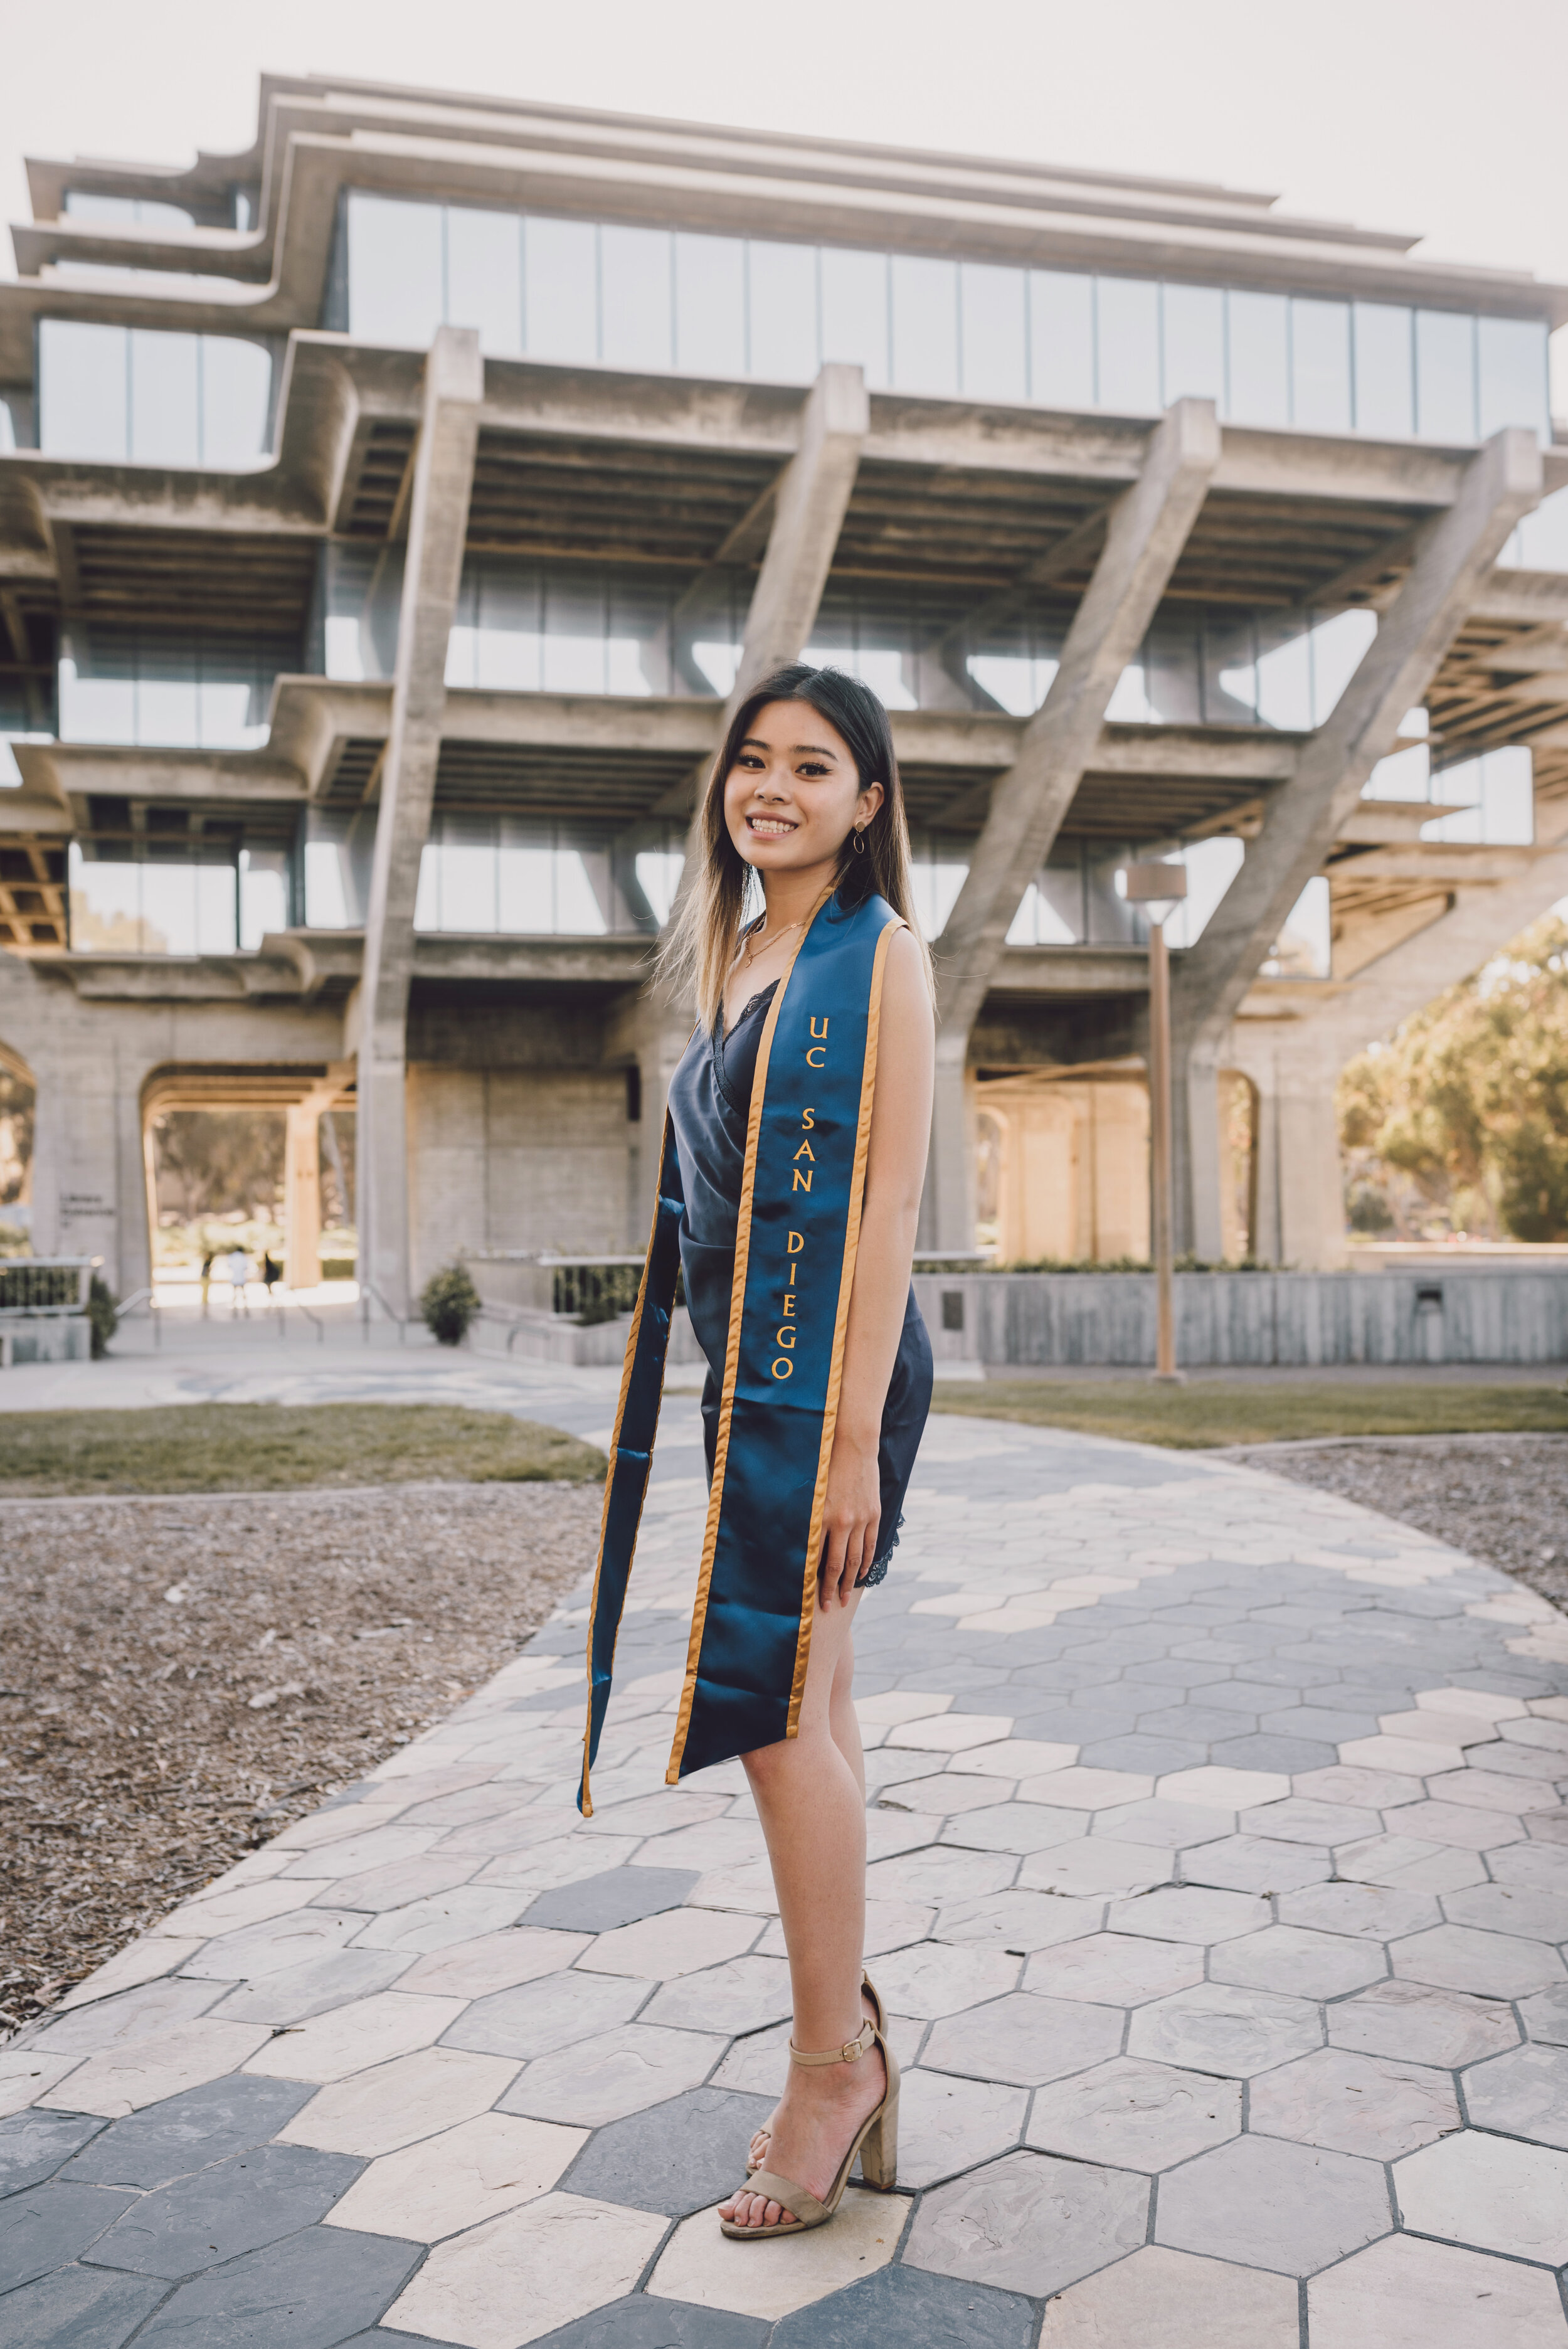 San-Diego-Graduation-Portrait-Photographer-UCSD-5.jpg